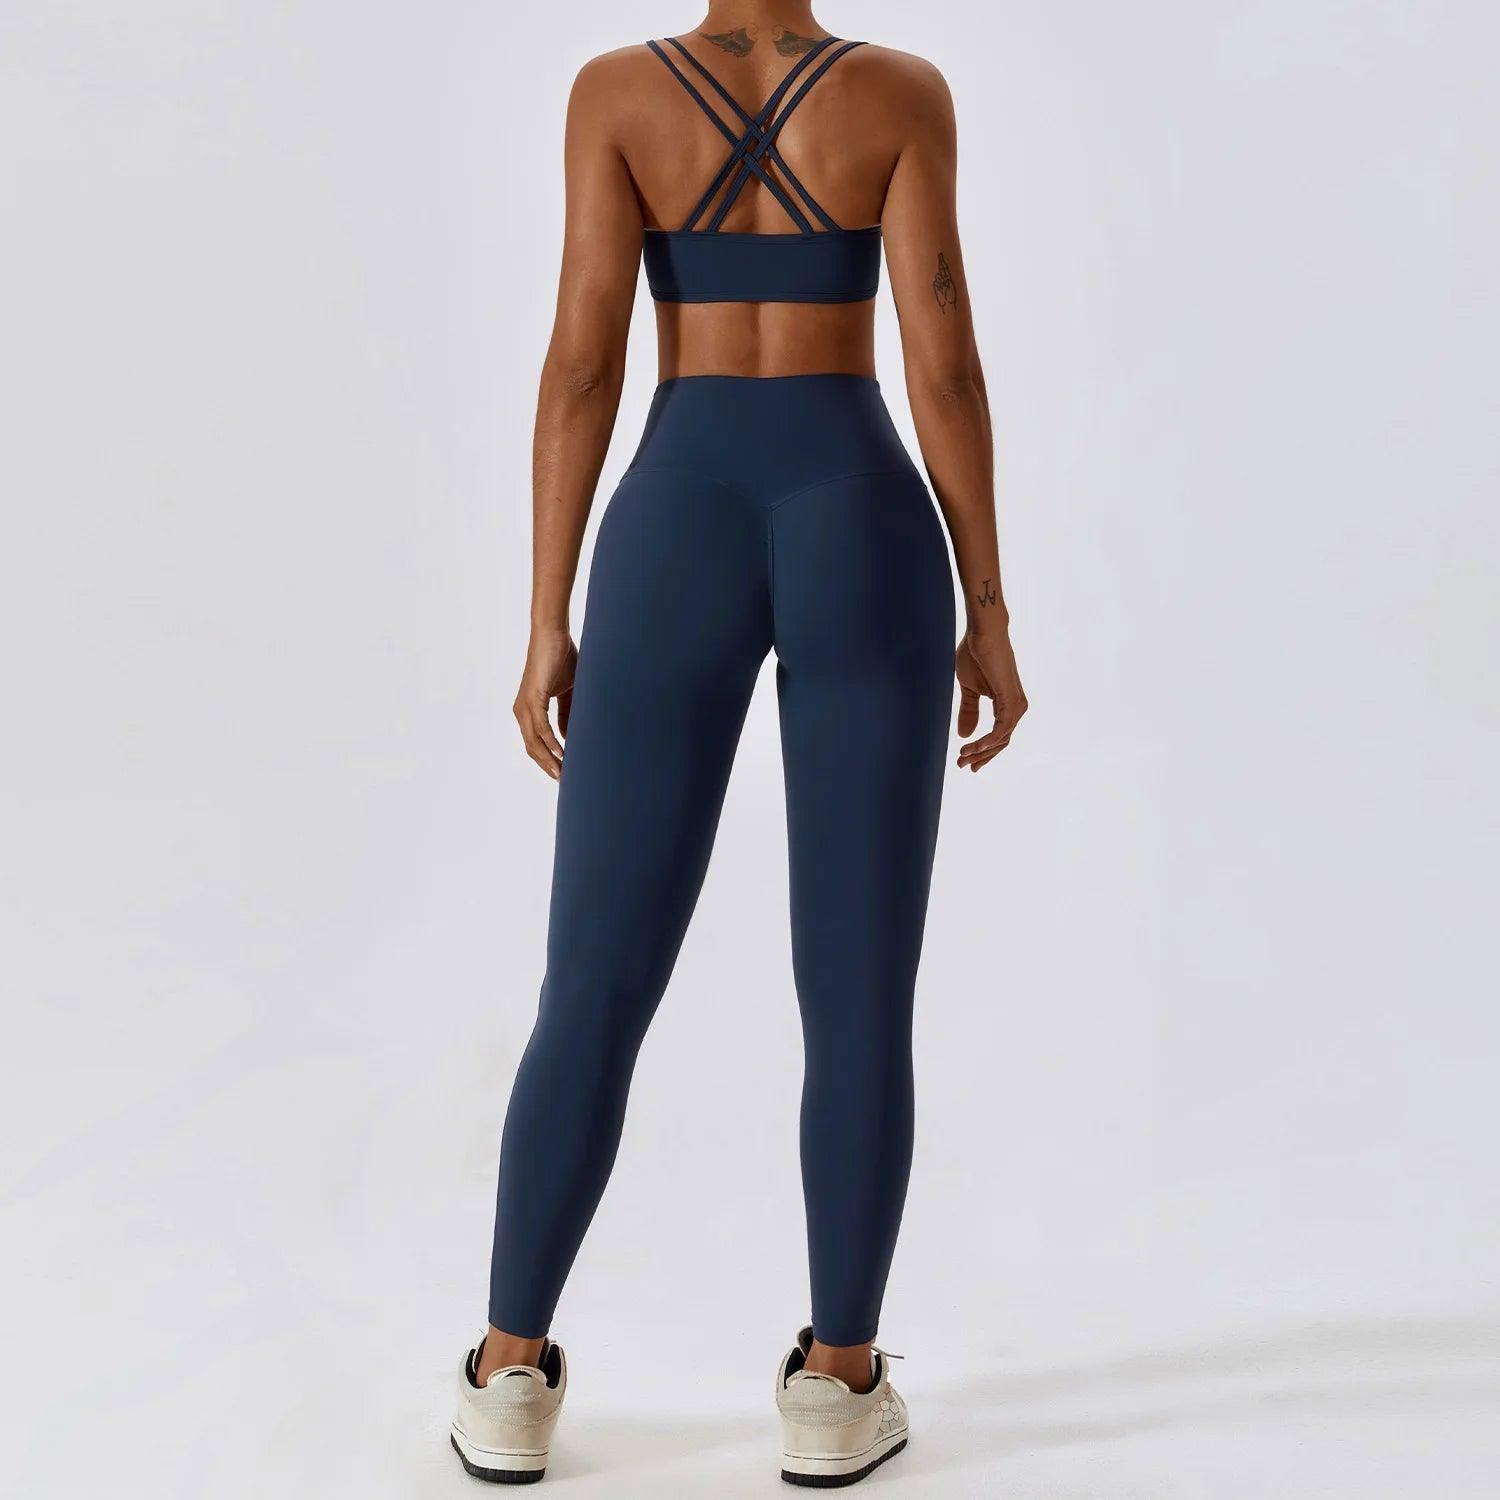 Yoga Clothing Sets Women Athletic Wear High Waist Leggings-Badge Blue Set-1-1